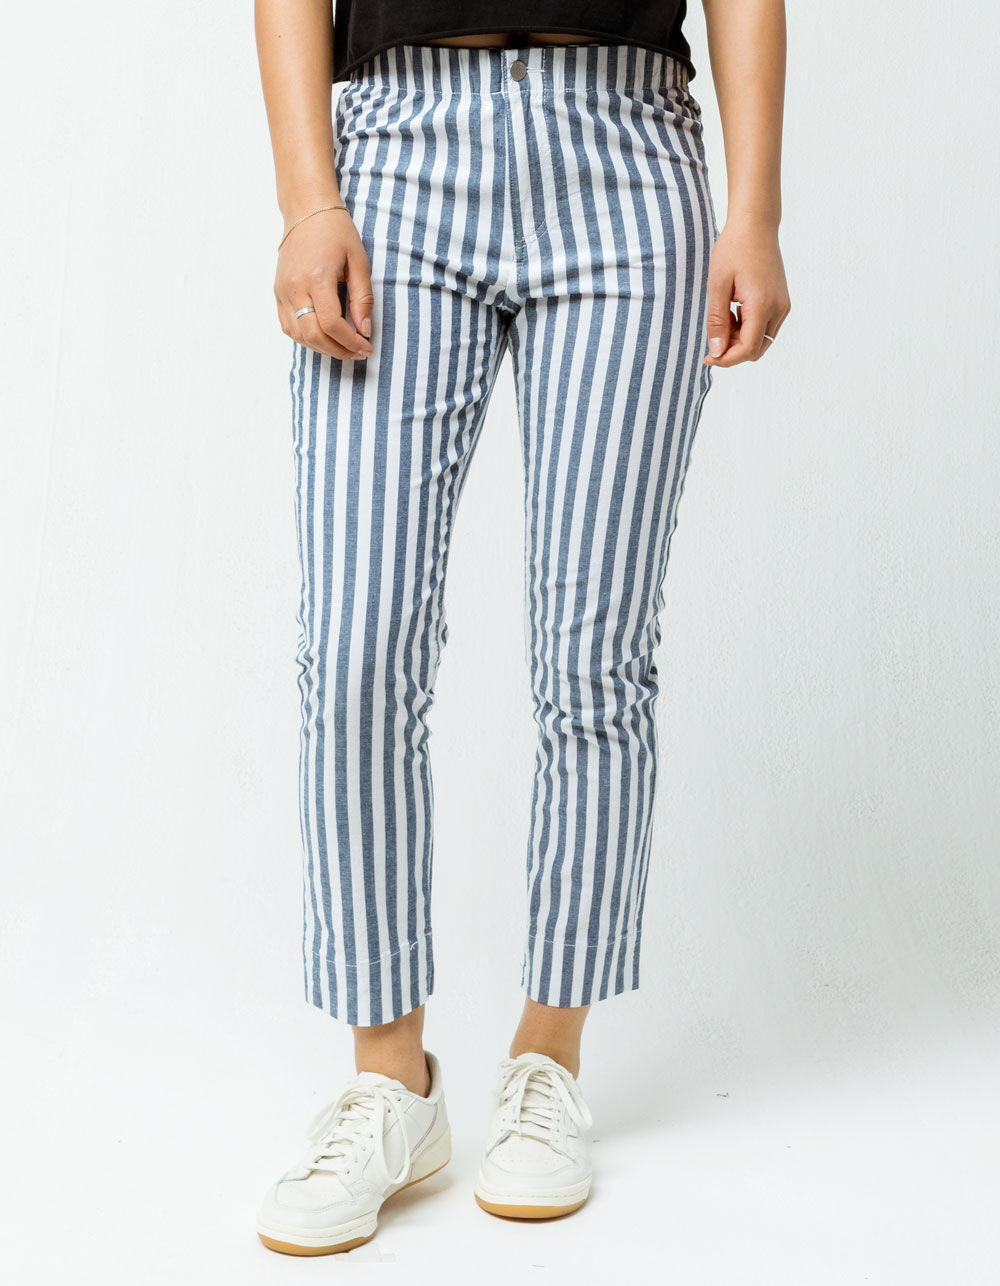 IVY & MAIN Stripe Womens Pants - BLUE/WHITE | Tillys